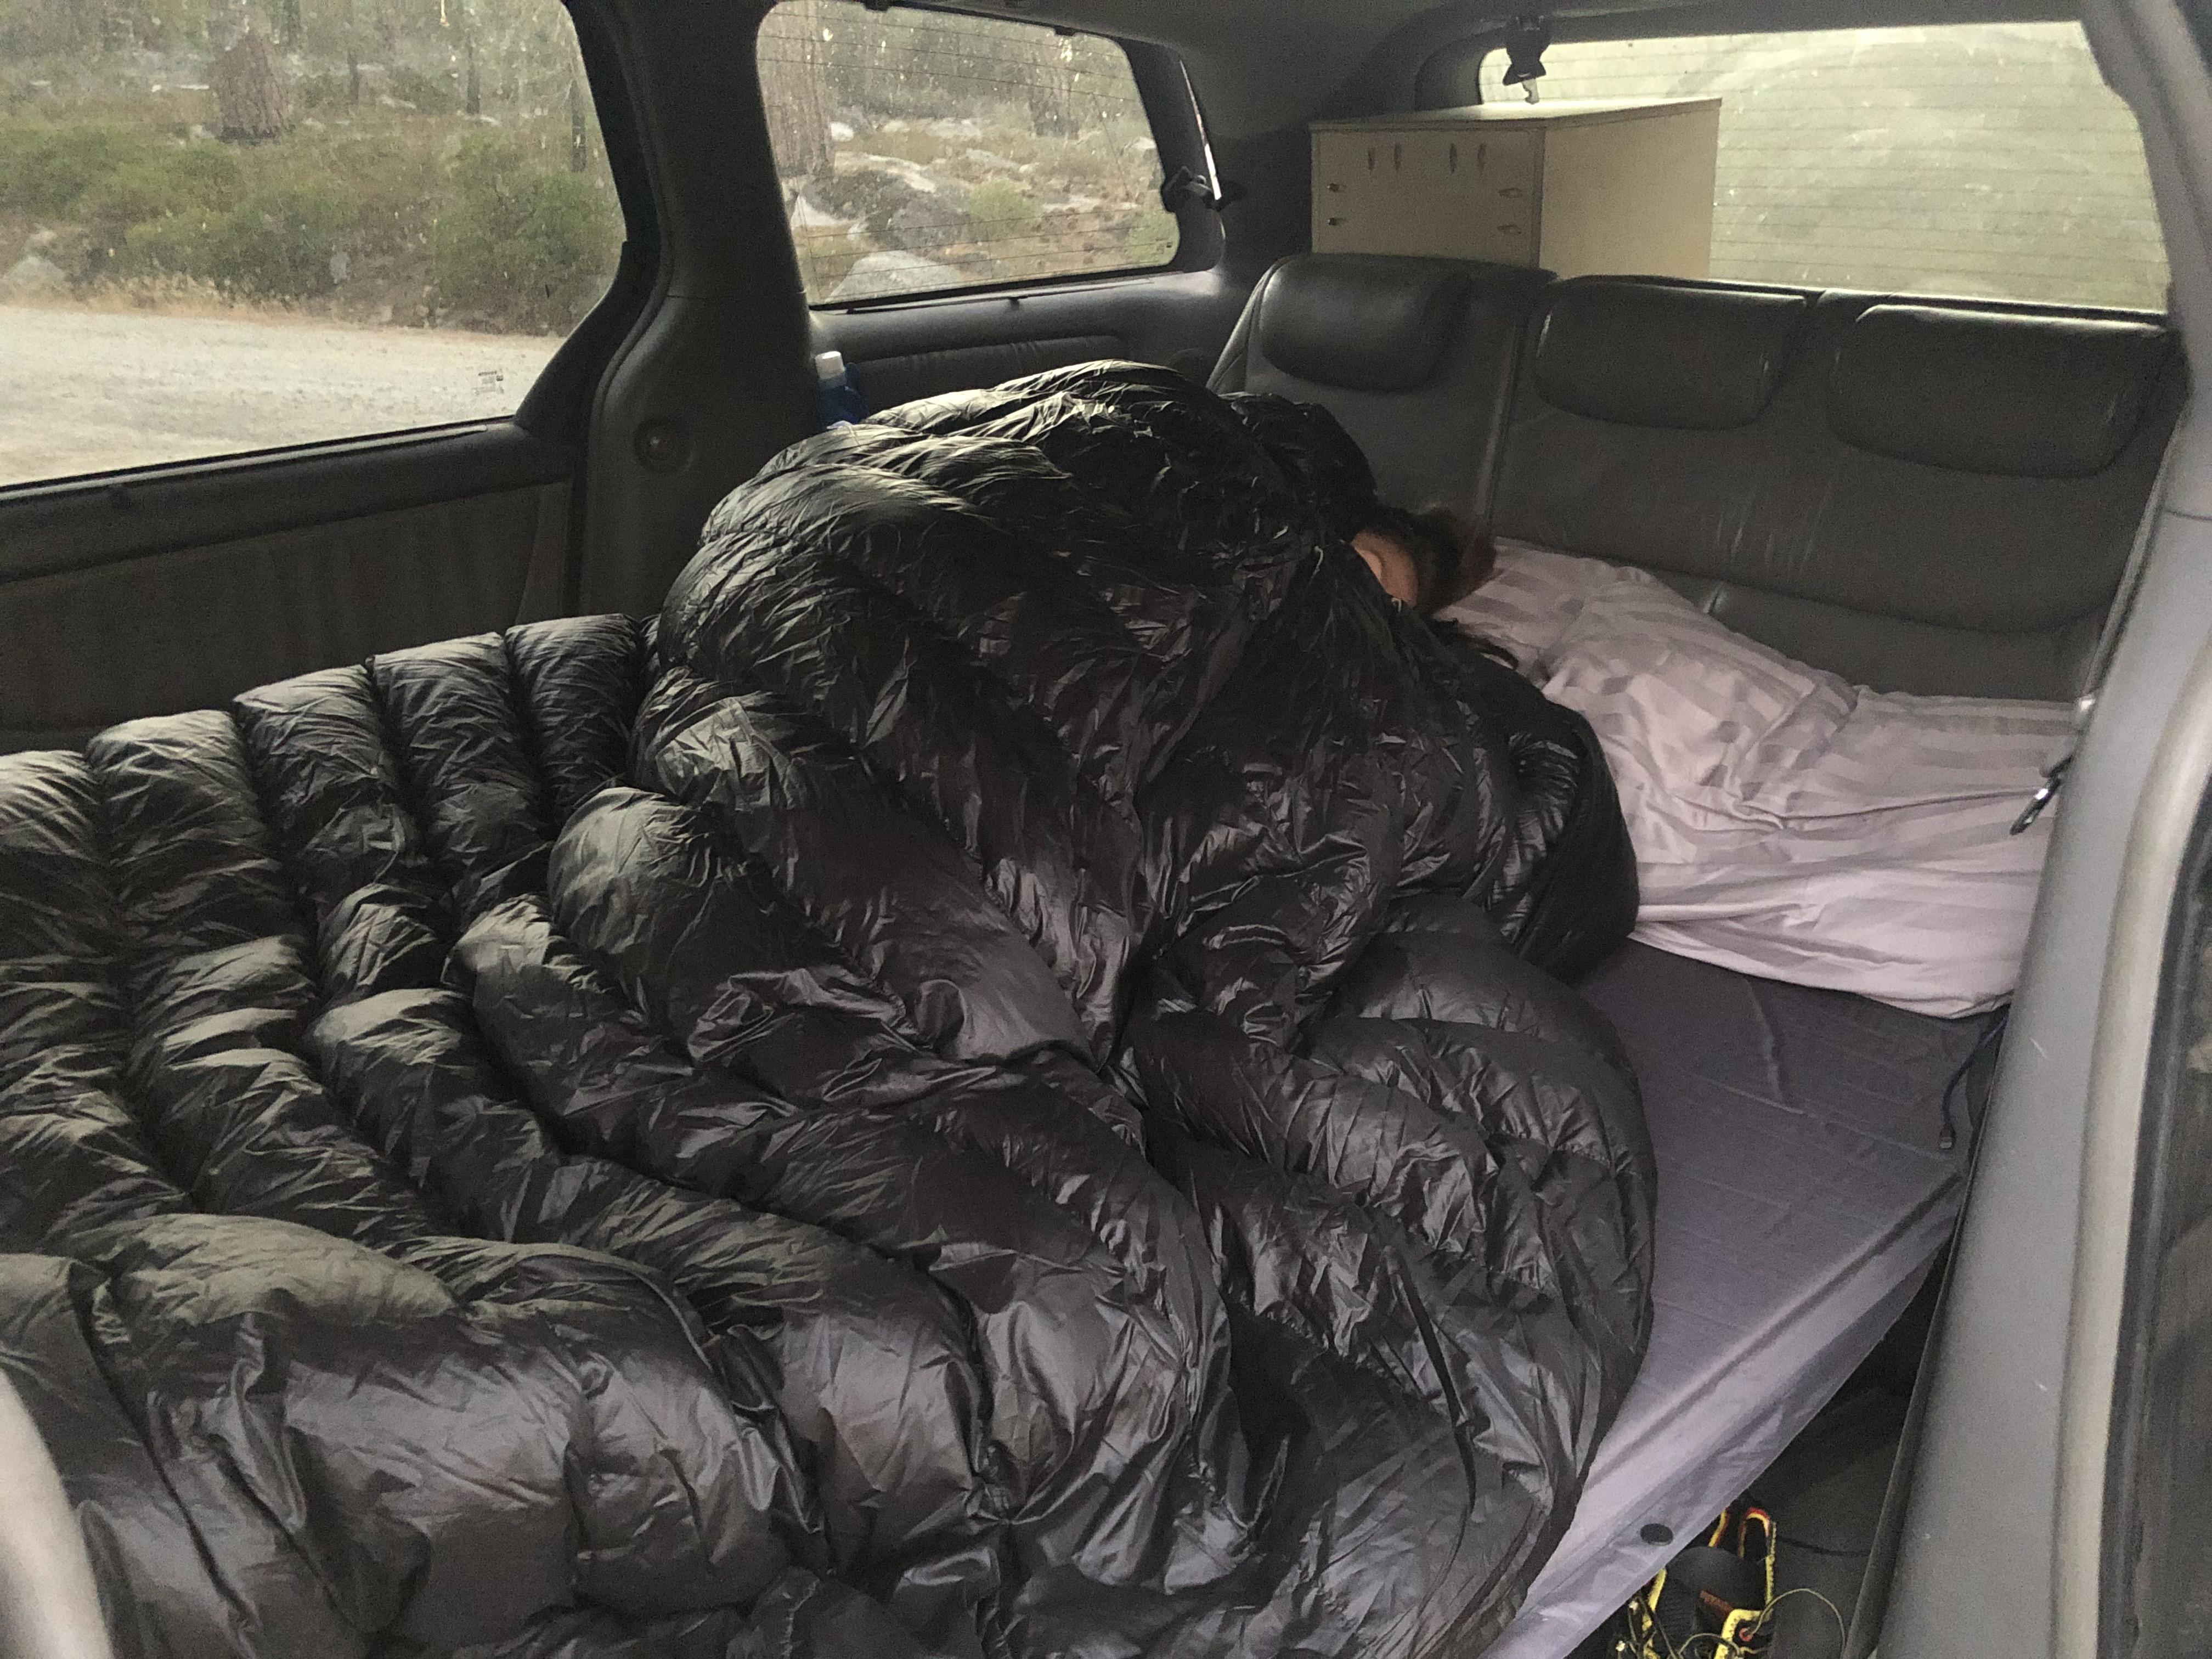 Sleeping in minivan